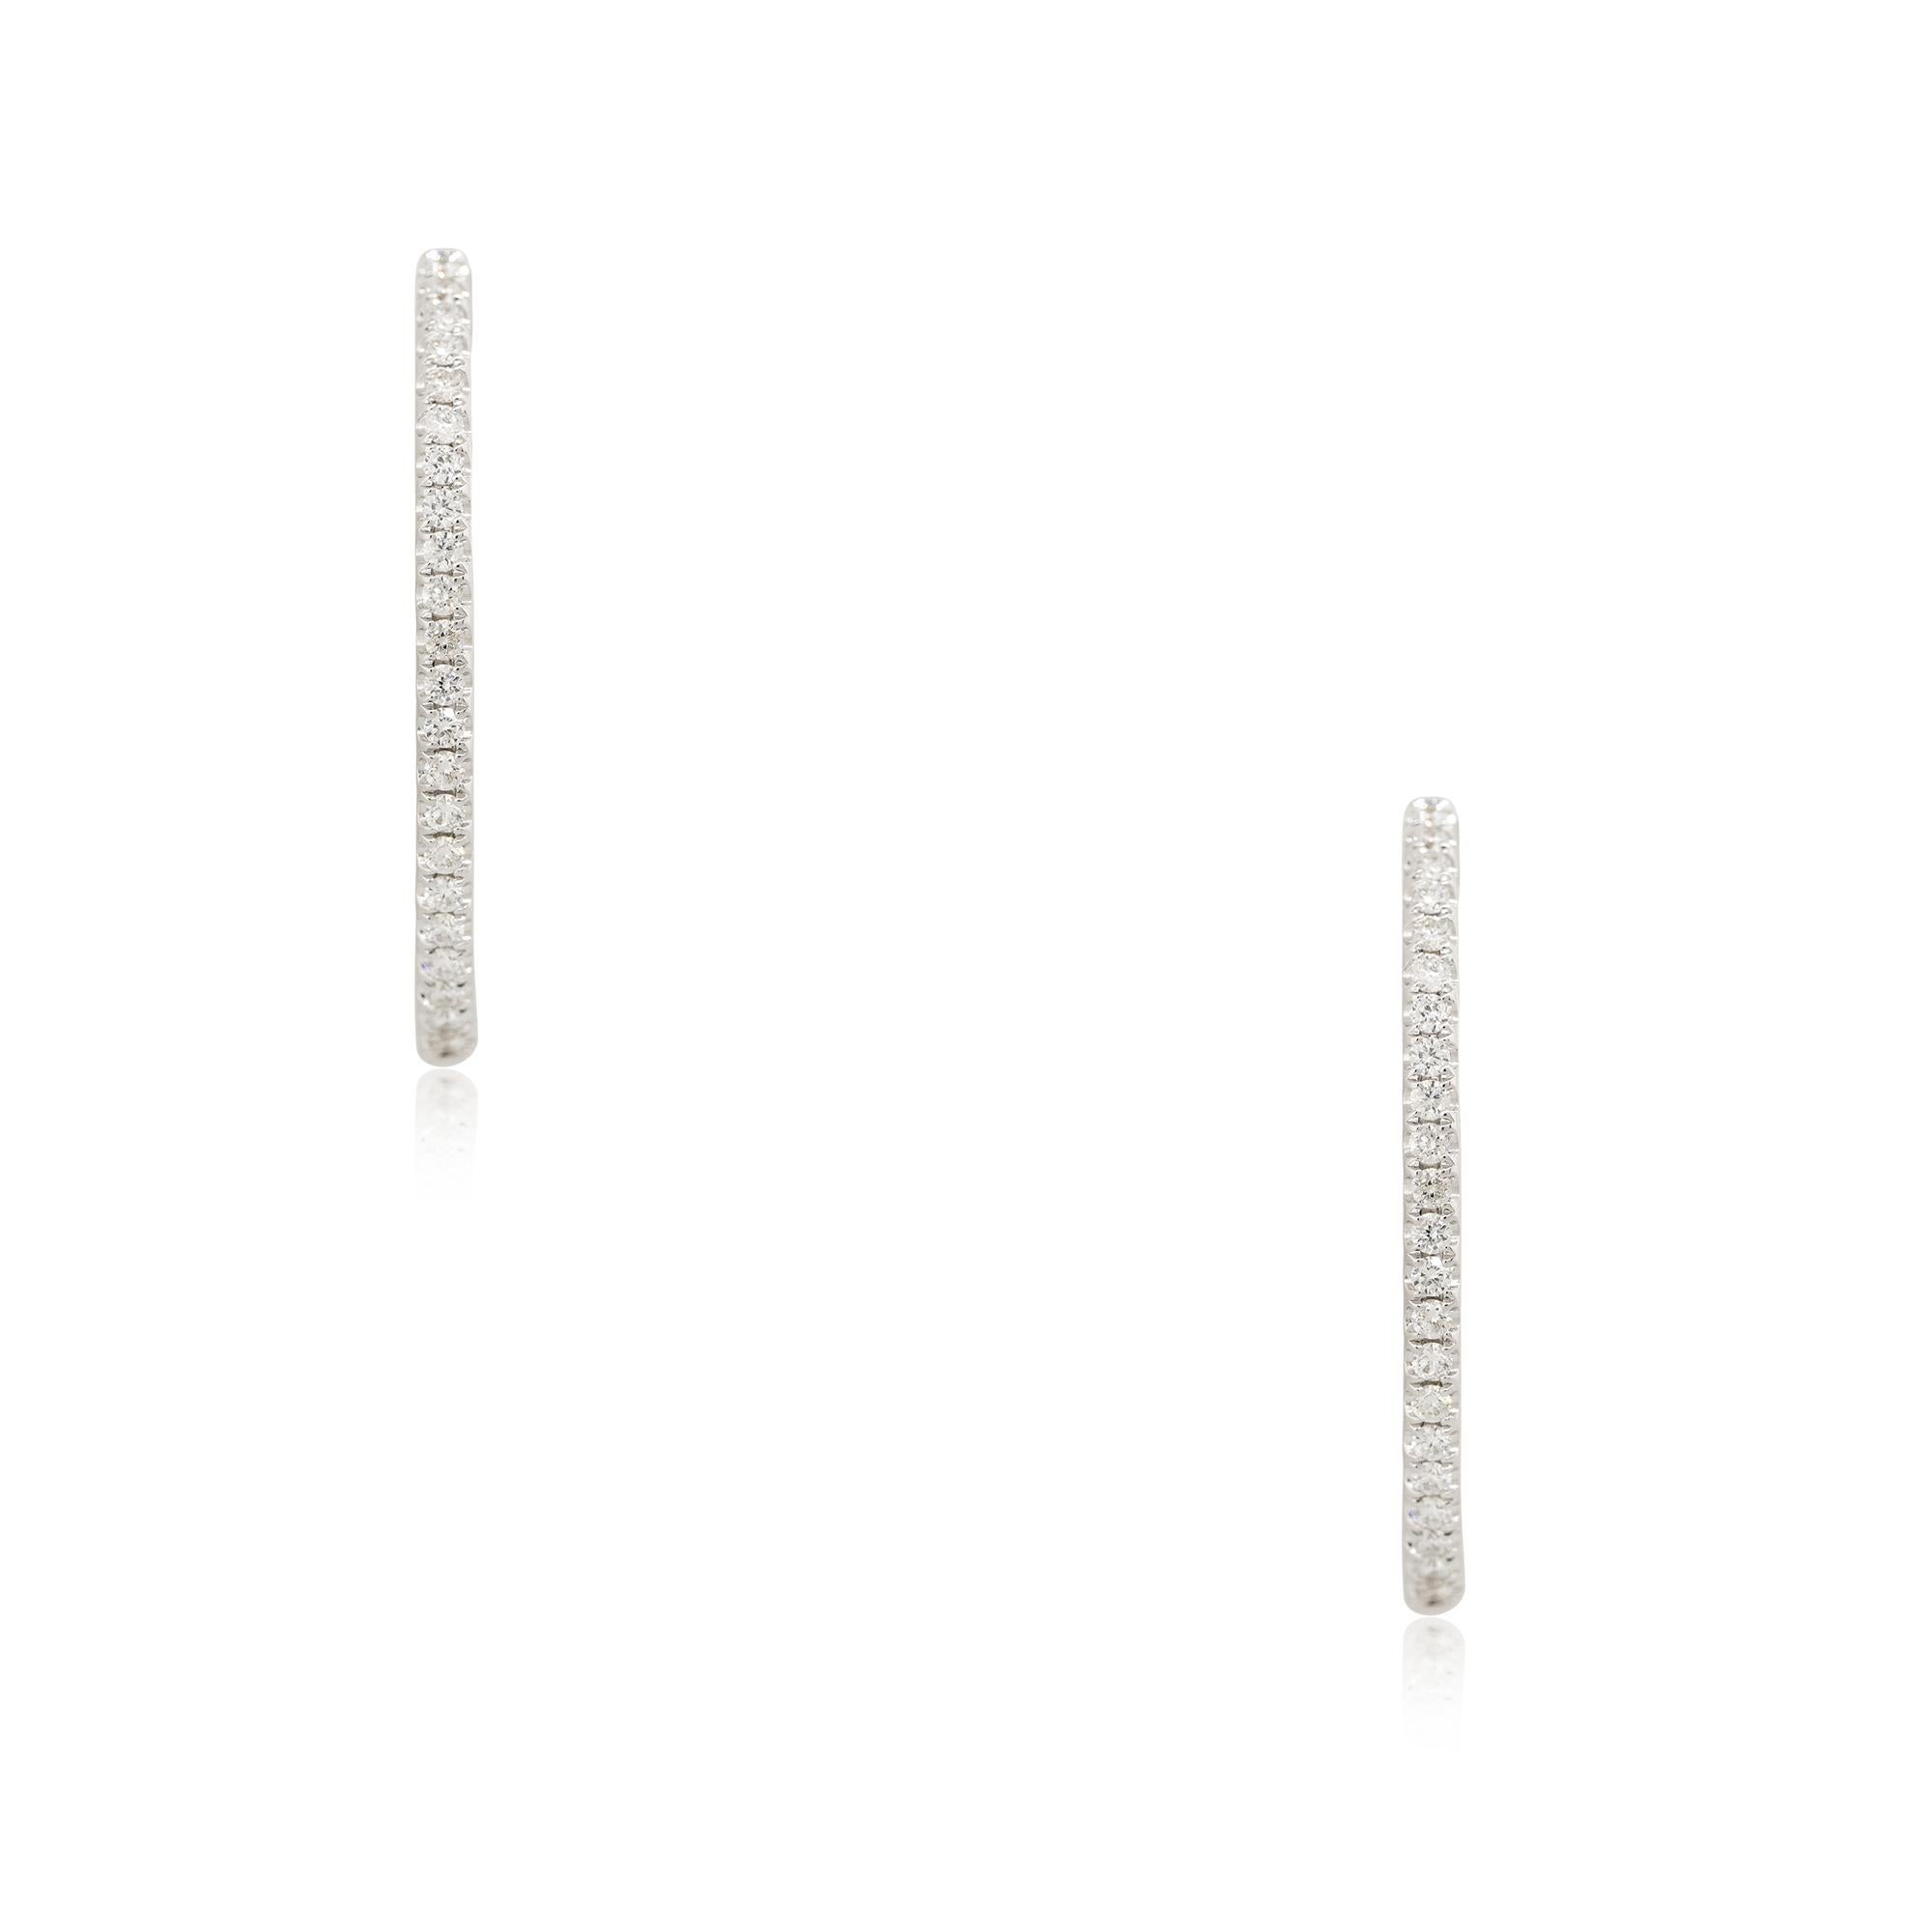 18k White Gold 0.55ctw Diamond Oval Hoop Earrings

Product: Oval Shaped Diamond Hoop Earrings
Material: 18k White Gold
Diamond Details: There are approximately 0.55 carats of Round Brilliant cut diamonds (44 stones)
Diamond Clarity: Diamonds are